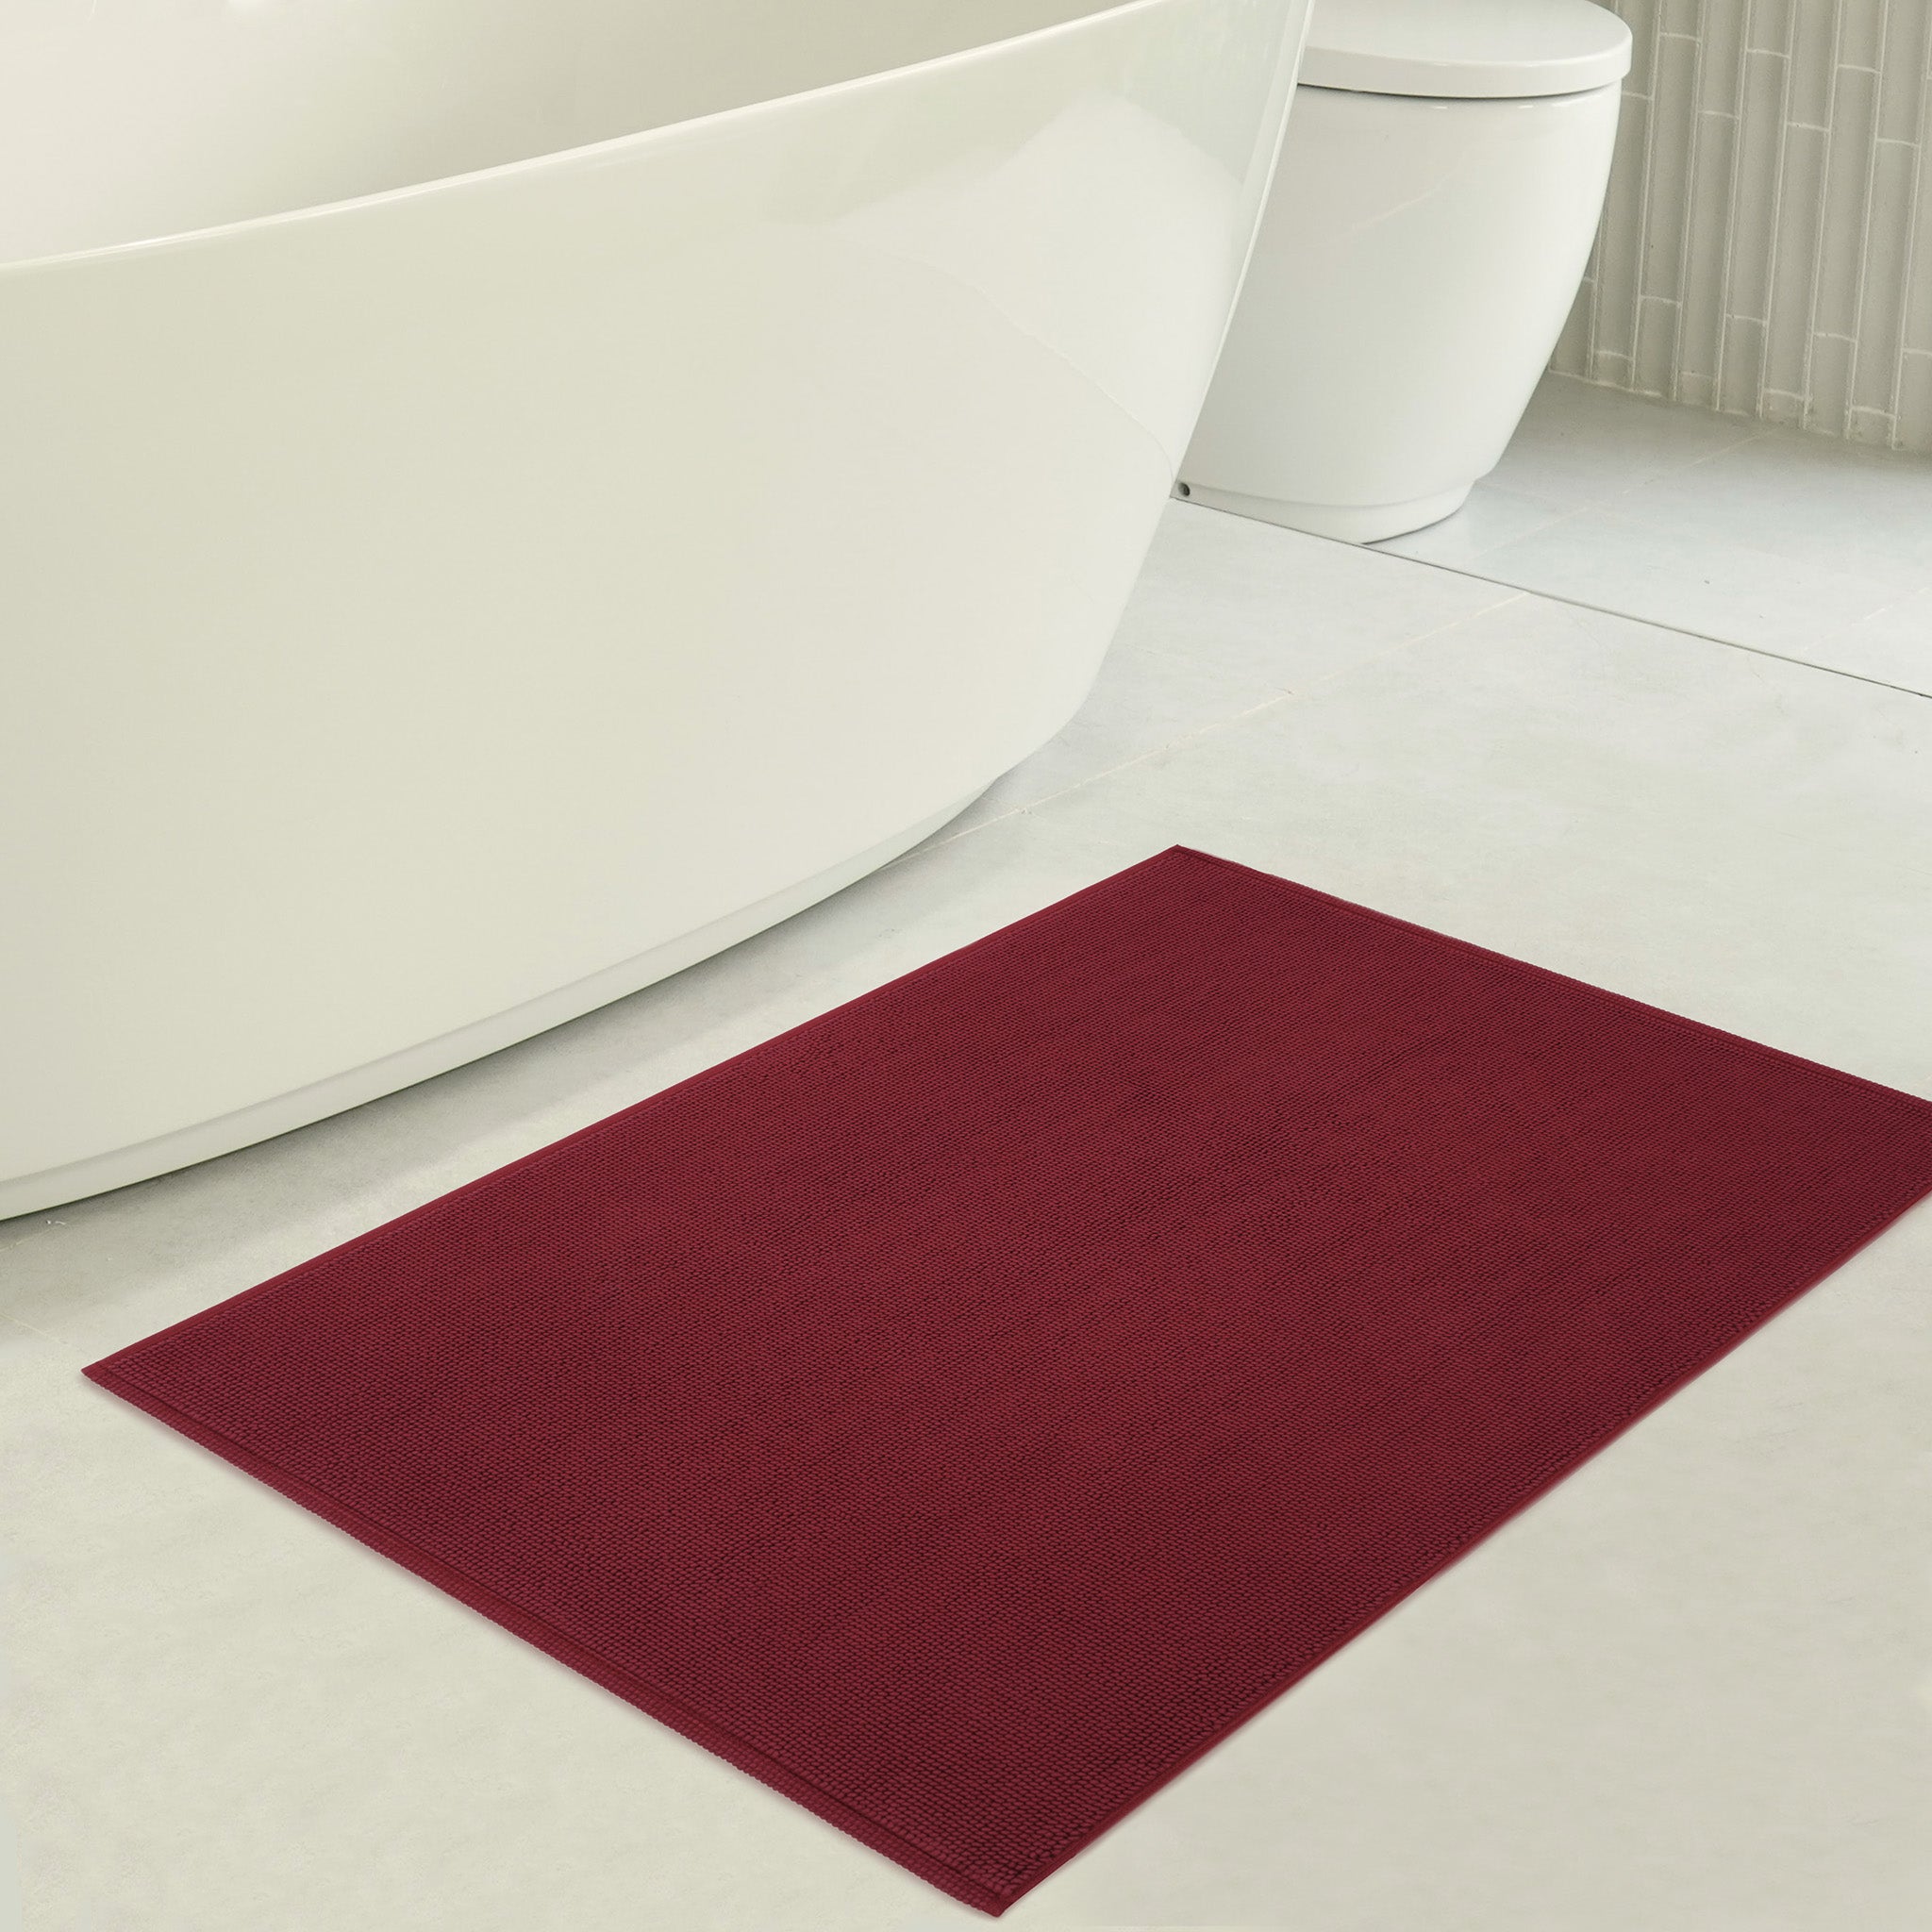 American Soft Linen 100% Cotton Non-Slip 17x24 Inch Bath Rug bordeaux-red-3